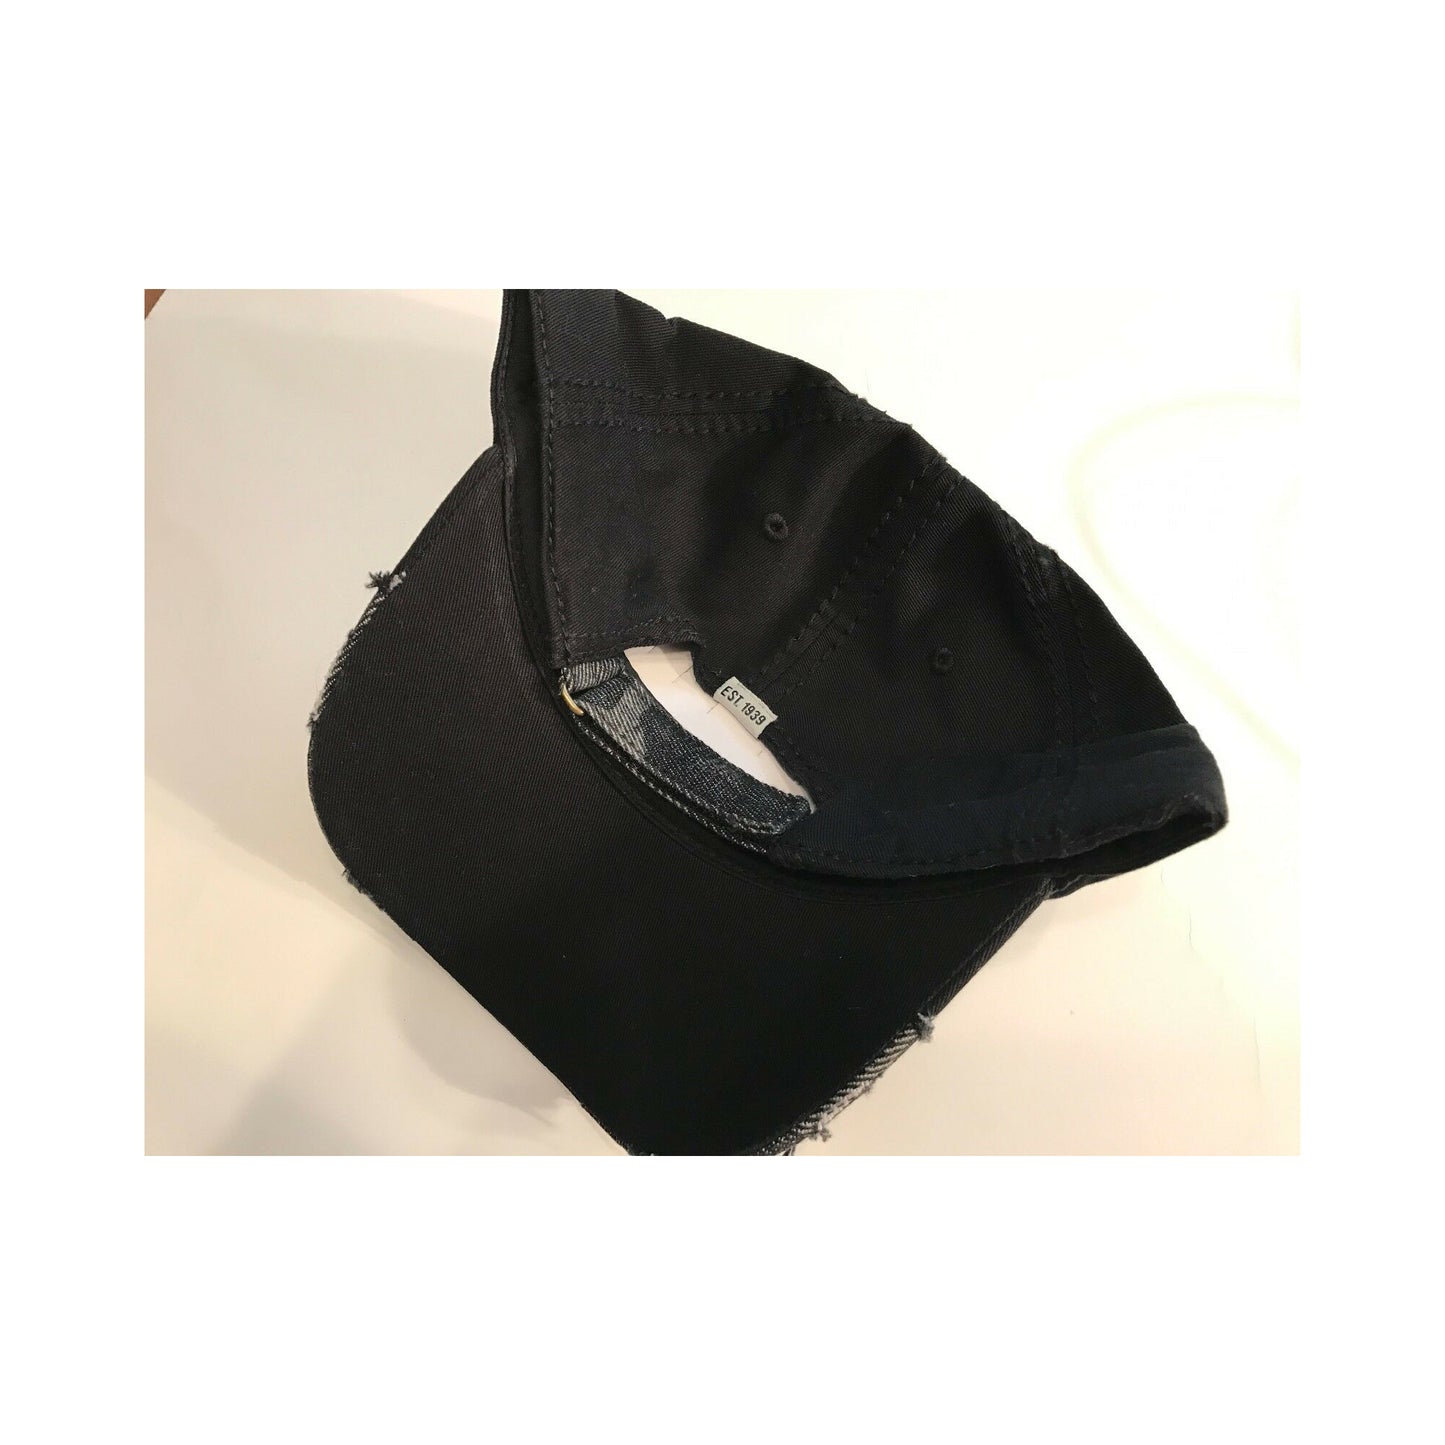 Authentic Mercury Marine Hat Frayed Black and Gray Camo